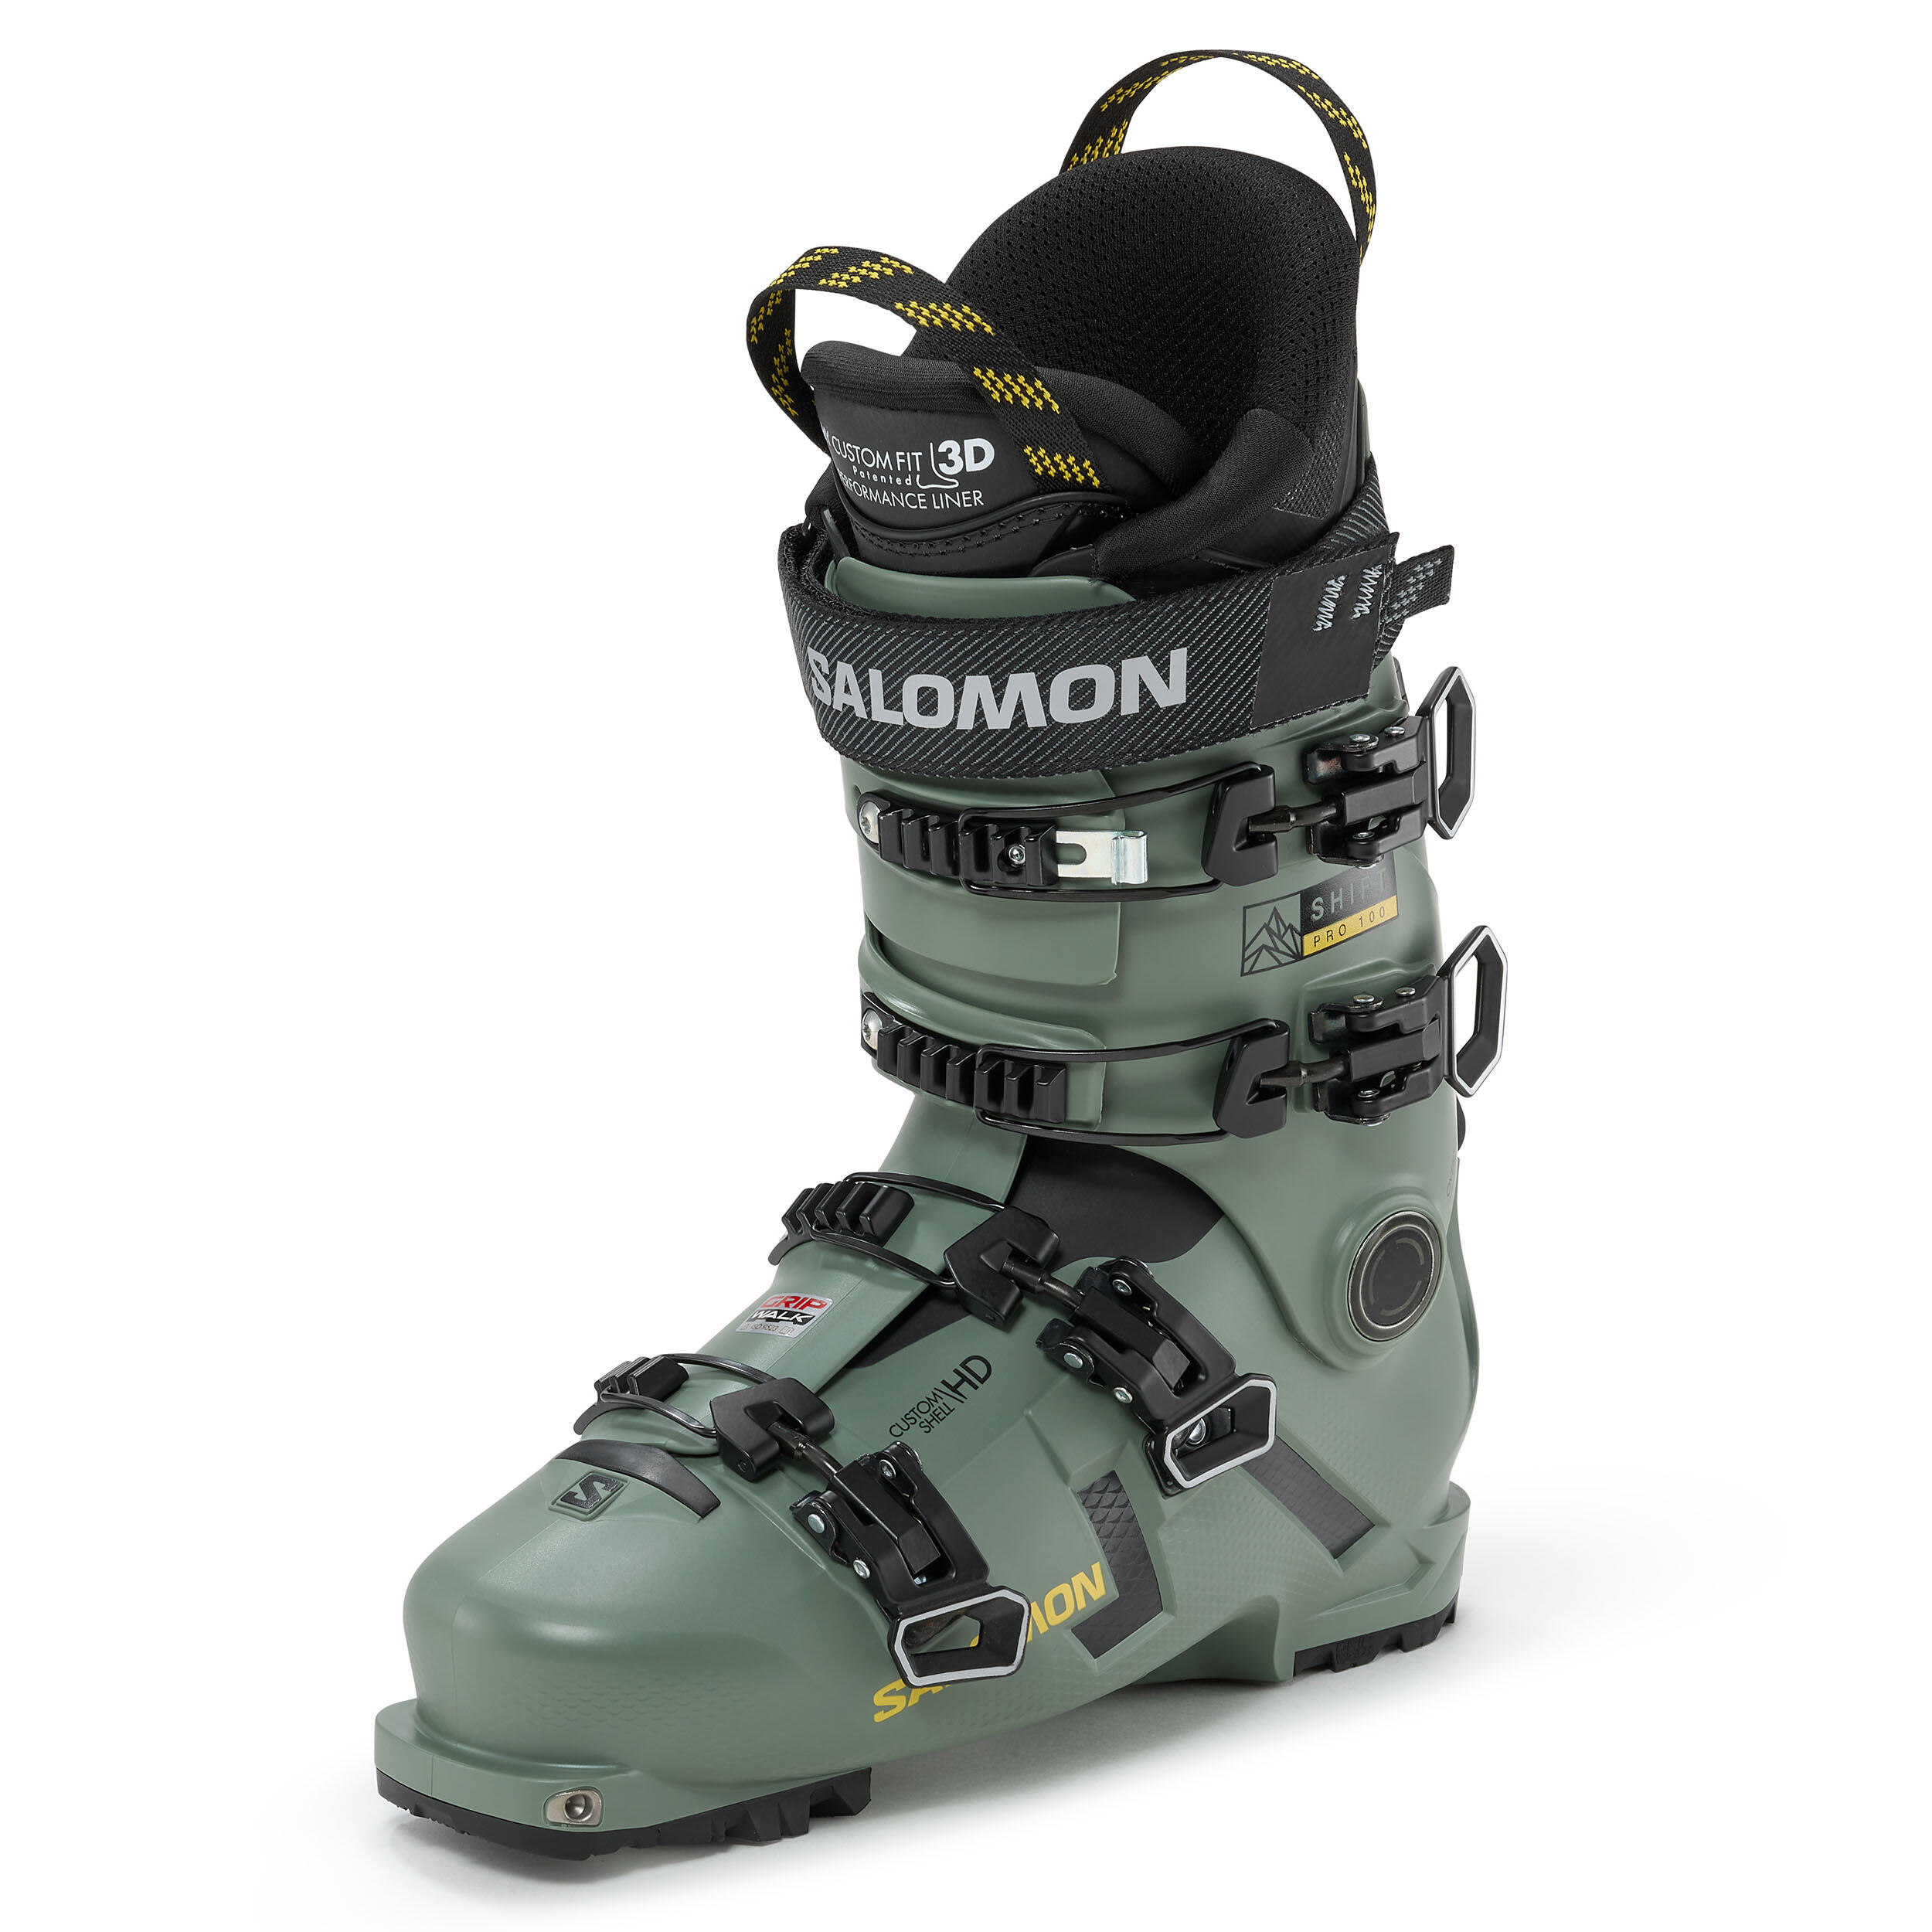 Clăpari schi de tură PRO 100 SALOMON Bărbați La Oferta Online decathlon imagine La Oferta Online